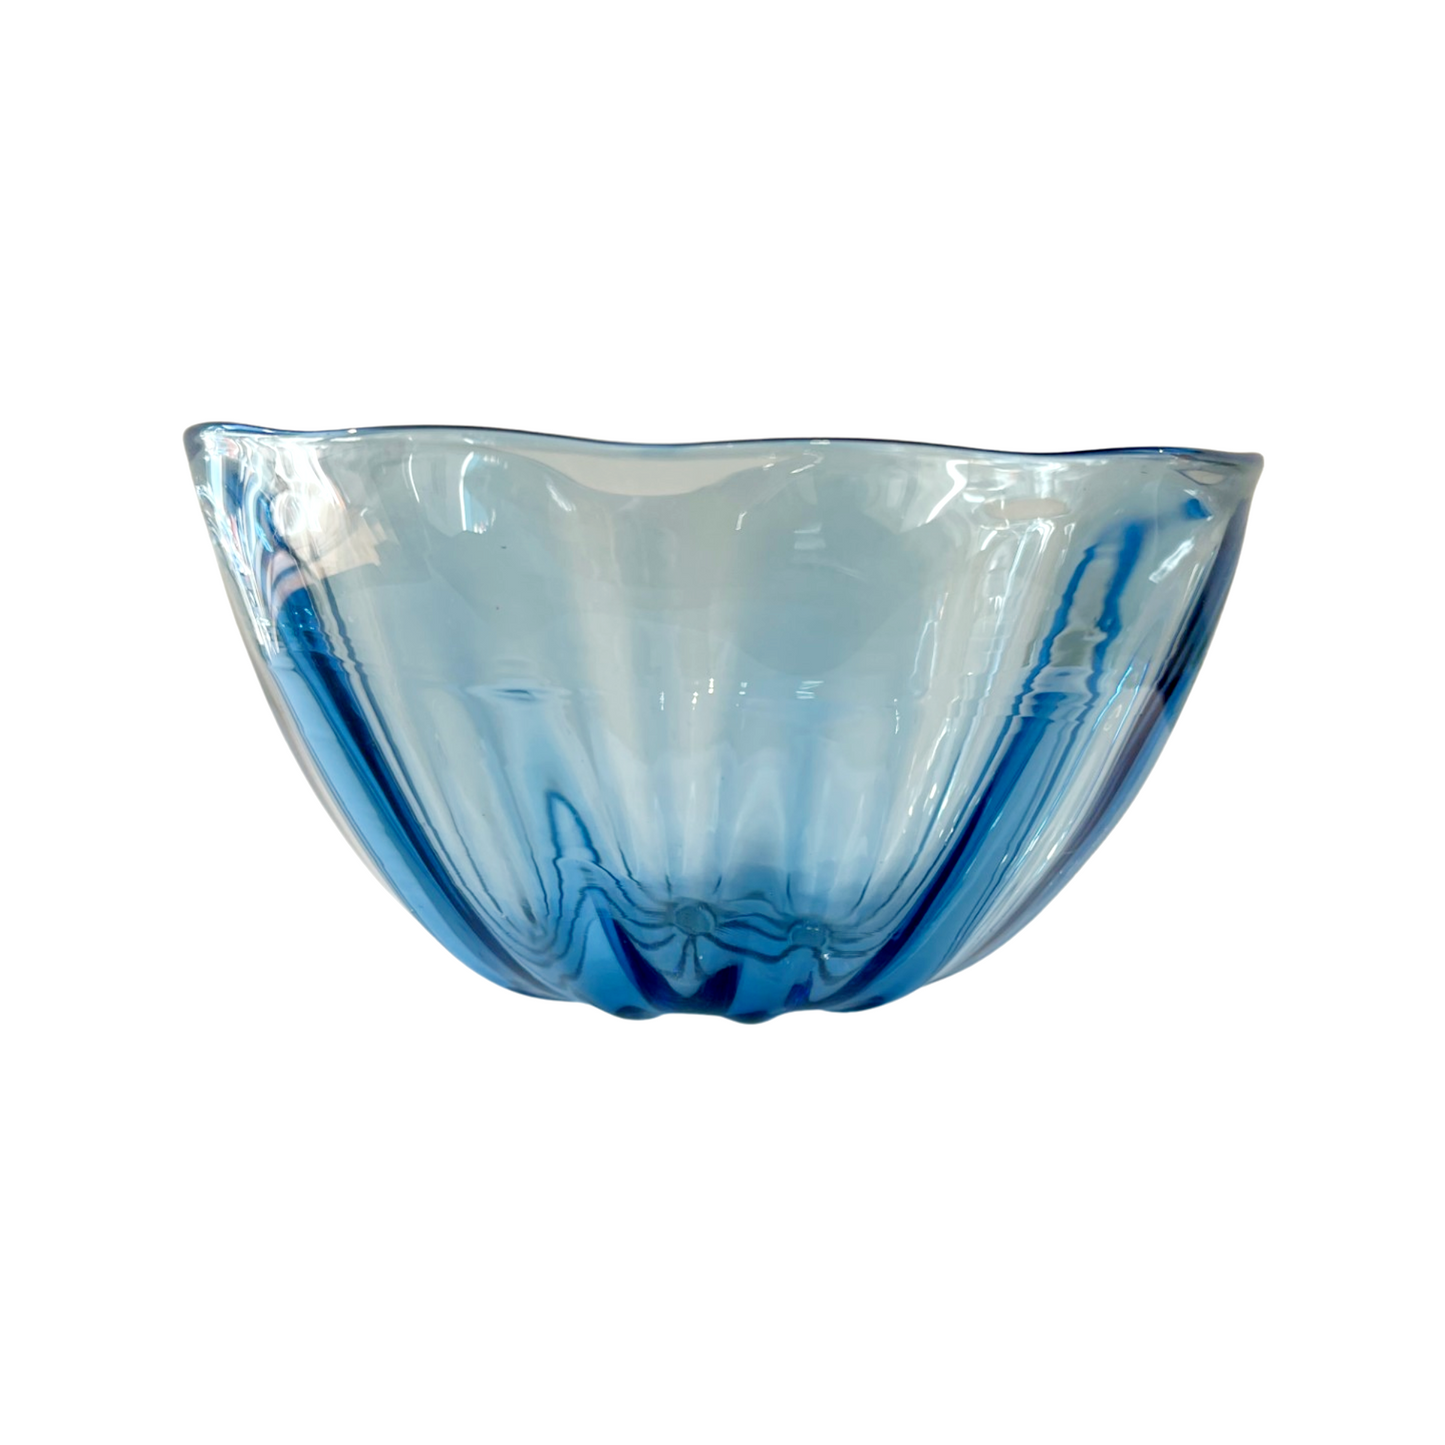 Light blue fluted glass bowl